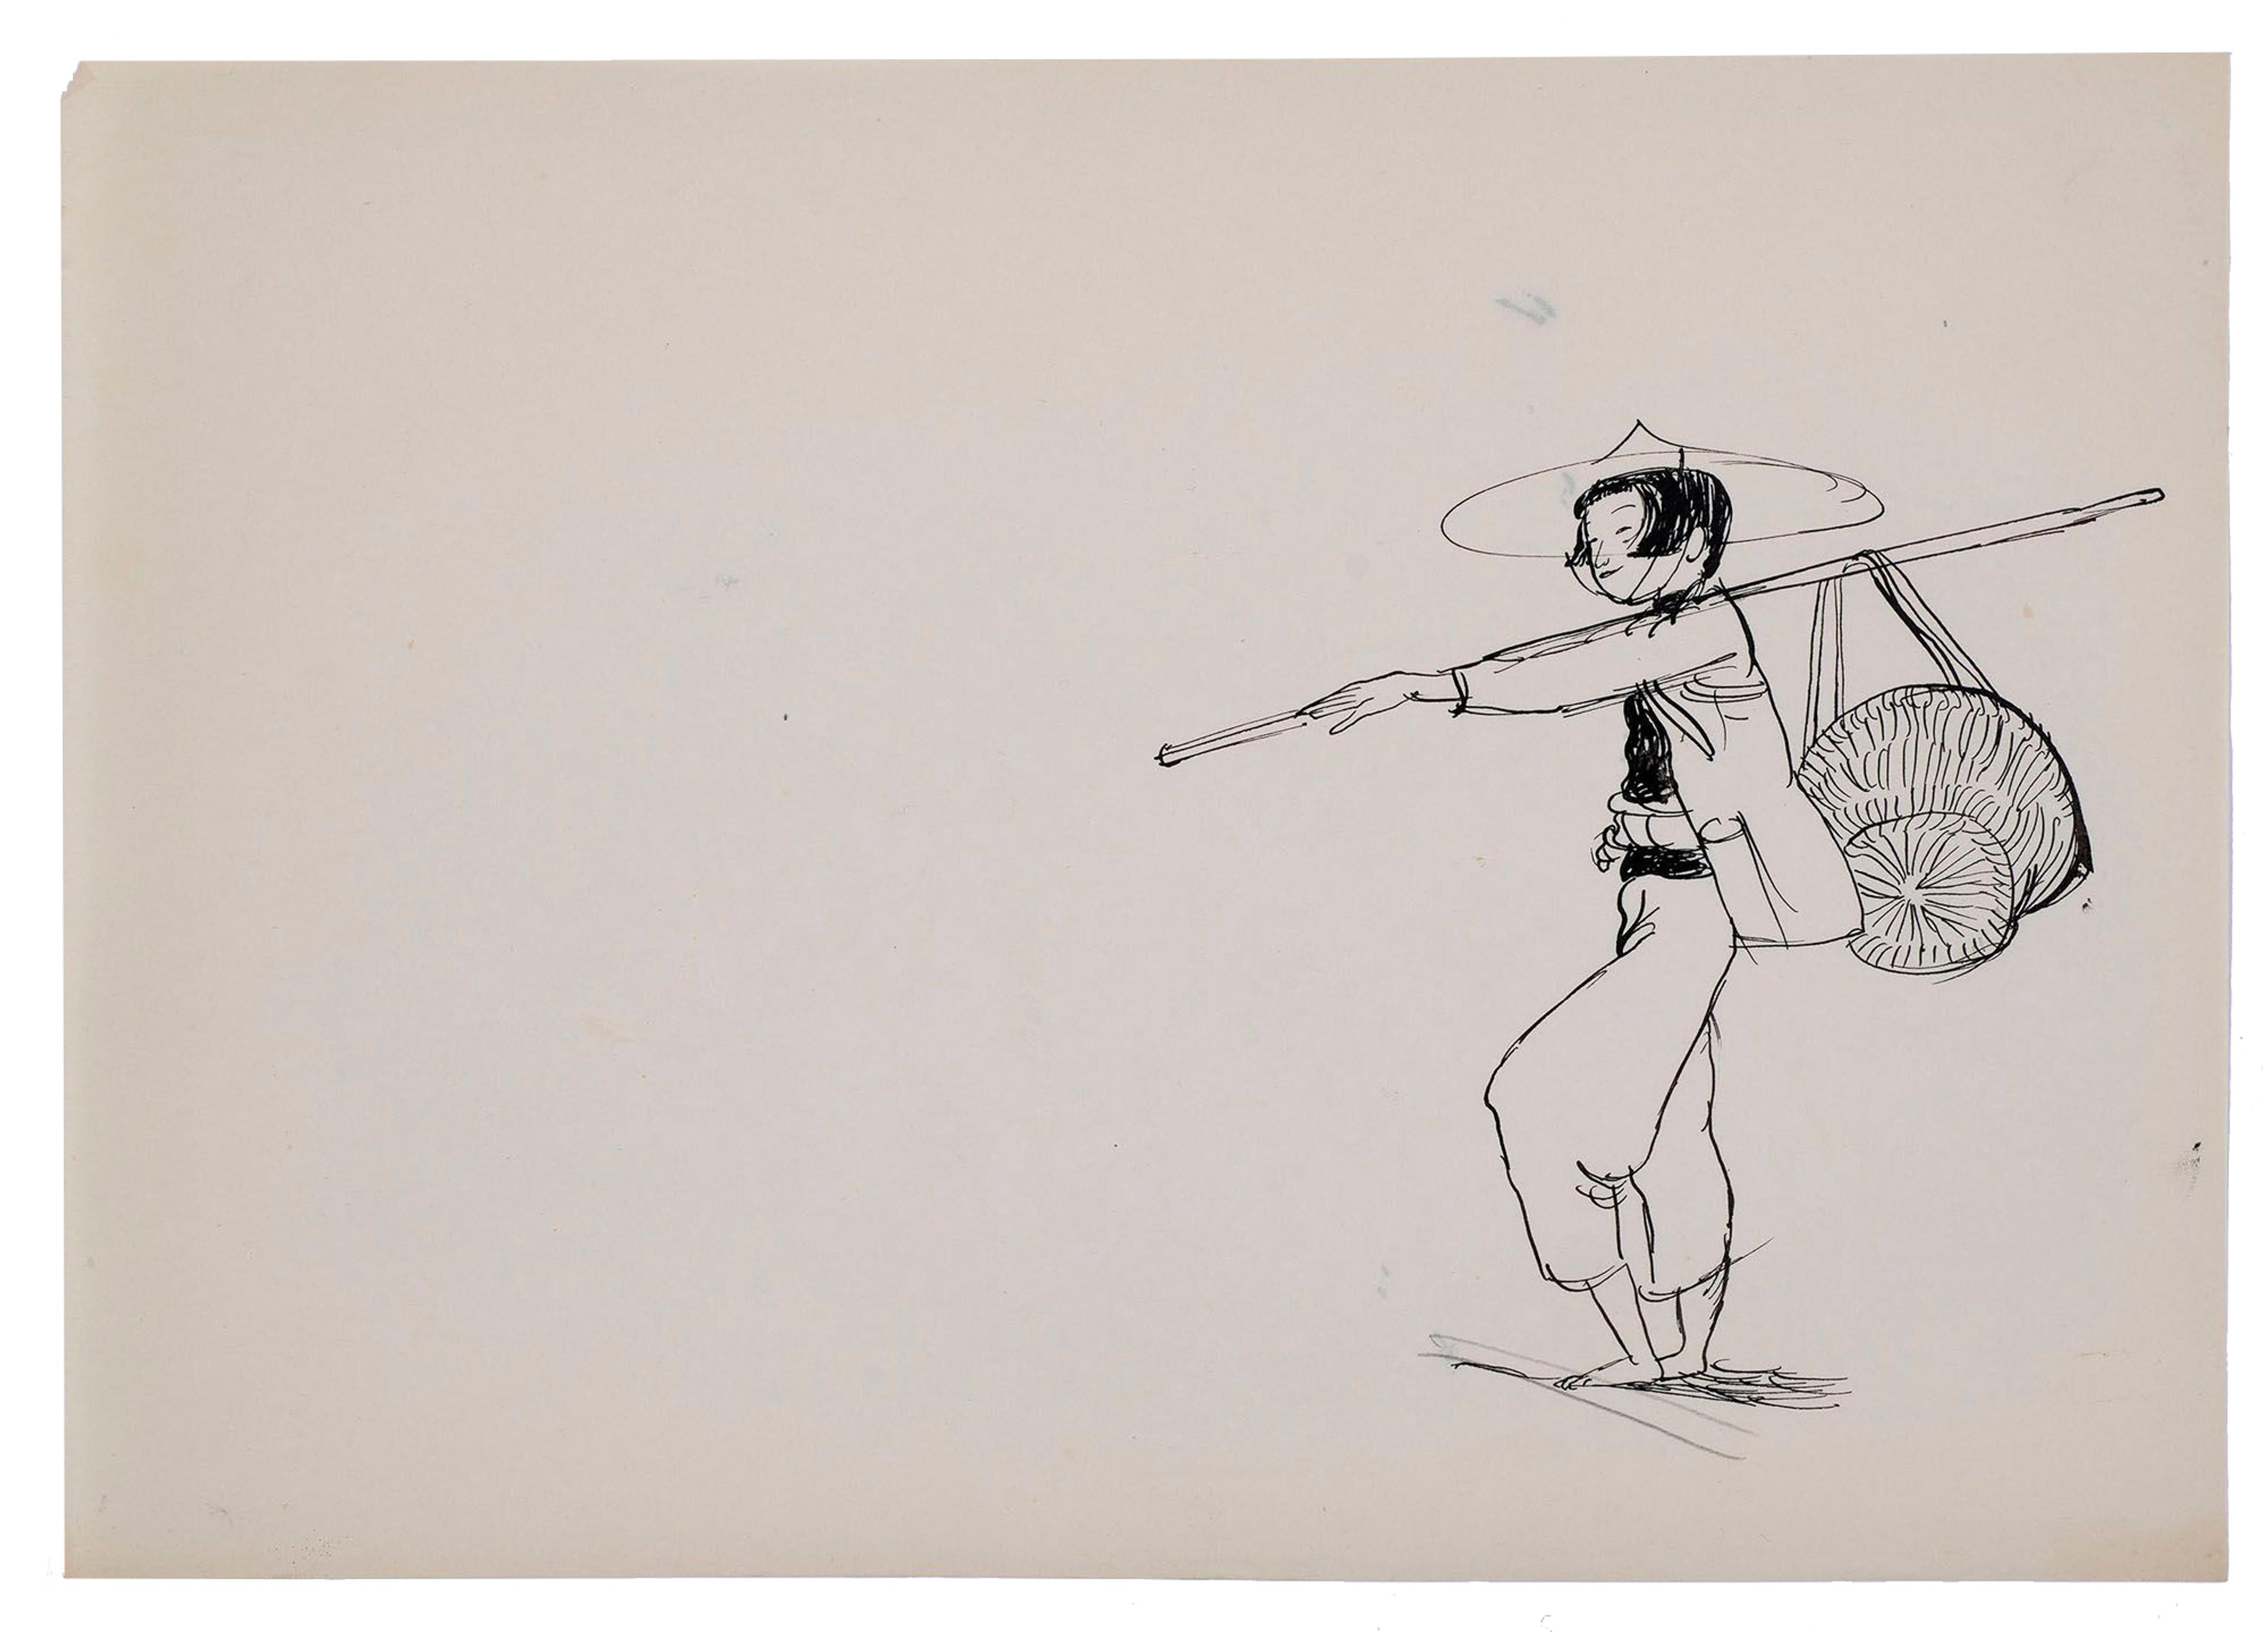 Black ink drawing of market-goer wearing a hat and holding basket on a stick over their shoulder